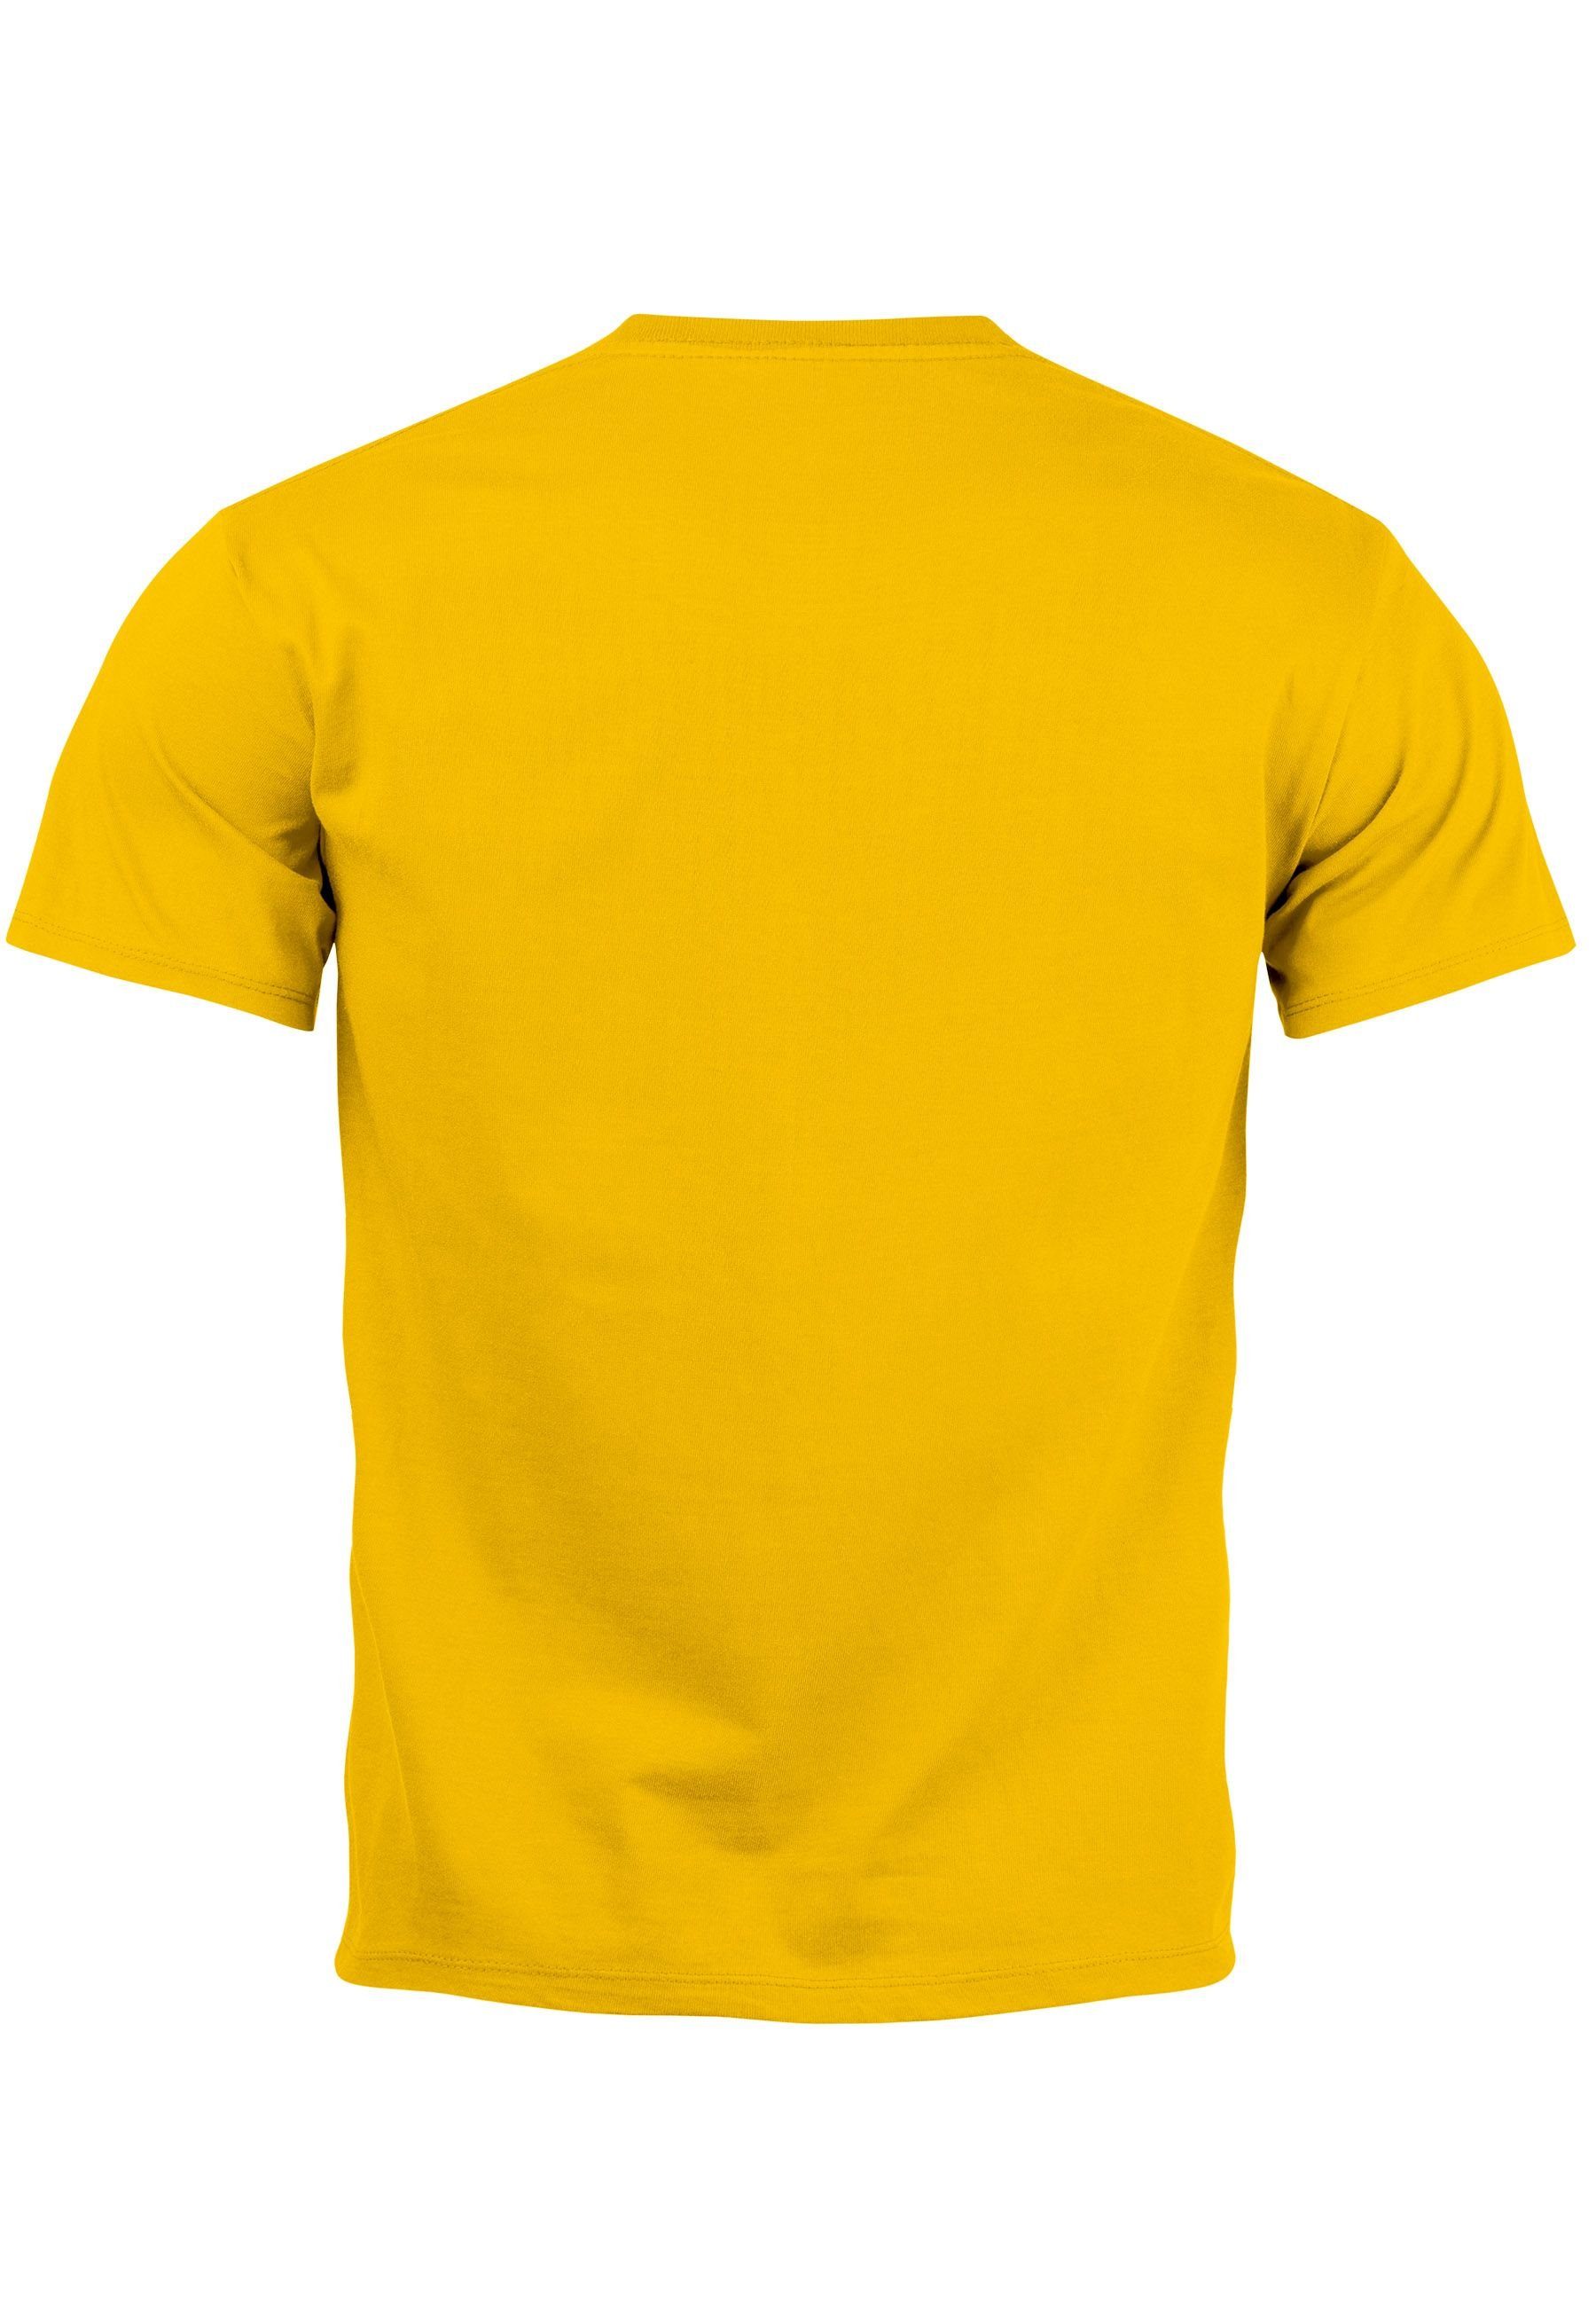 Neverless Print-Shirt Herren T-Shirt gelb Top Sommer Aufdruck Palmen mit Abstra California Print Foto Print